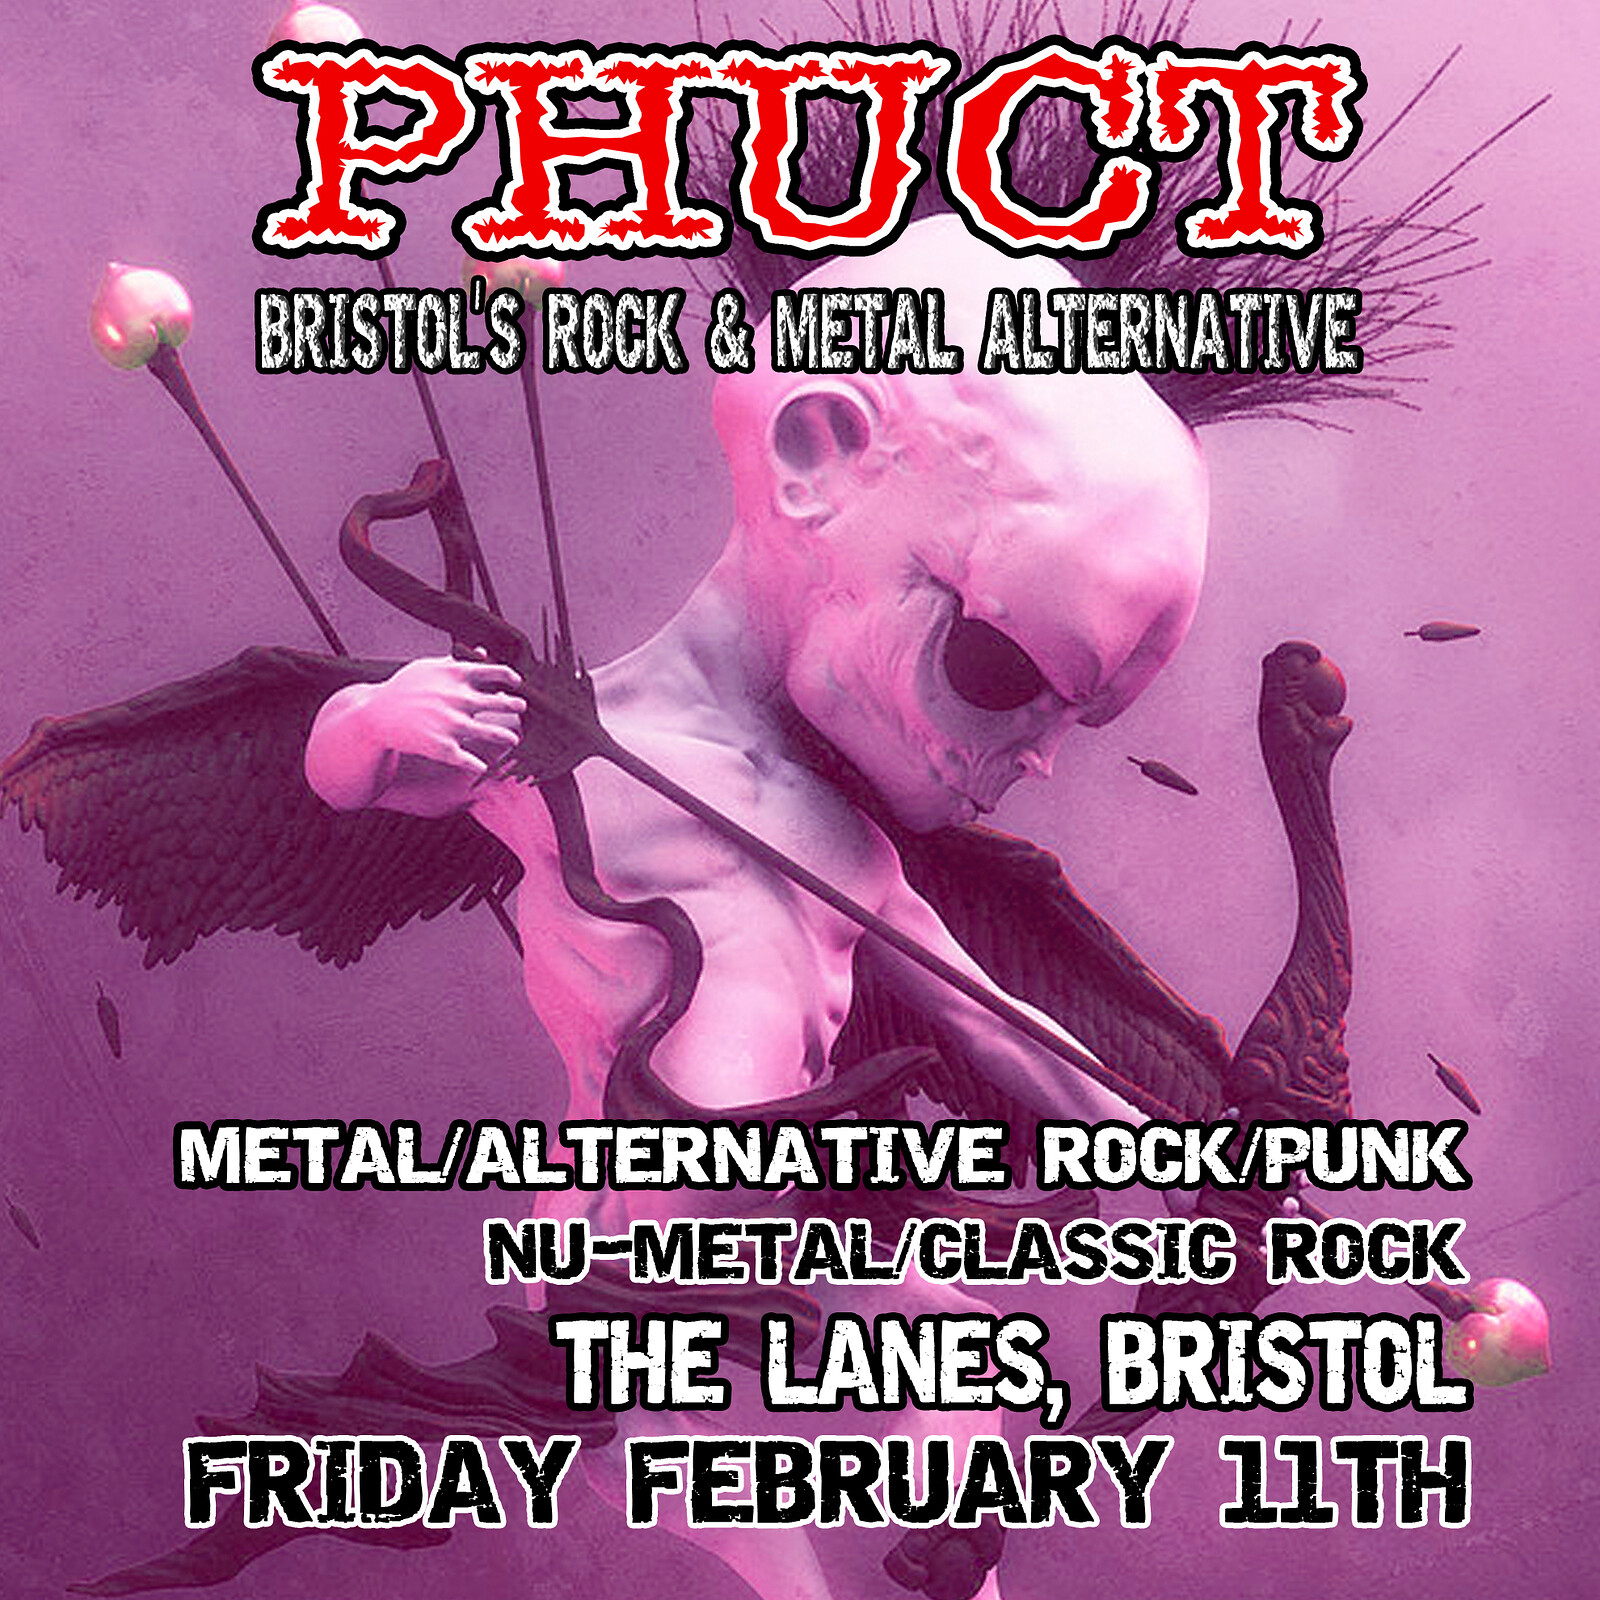 PHUCT - Bristol's Rock & Metal Alternative at The Lanes